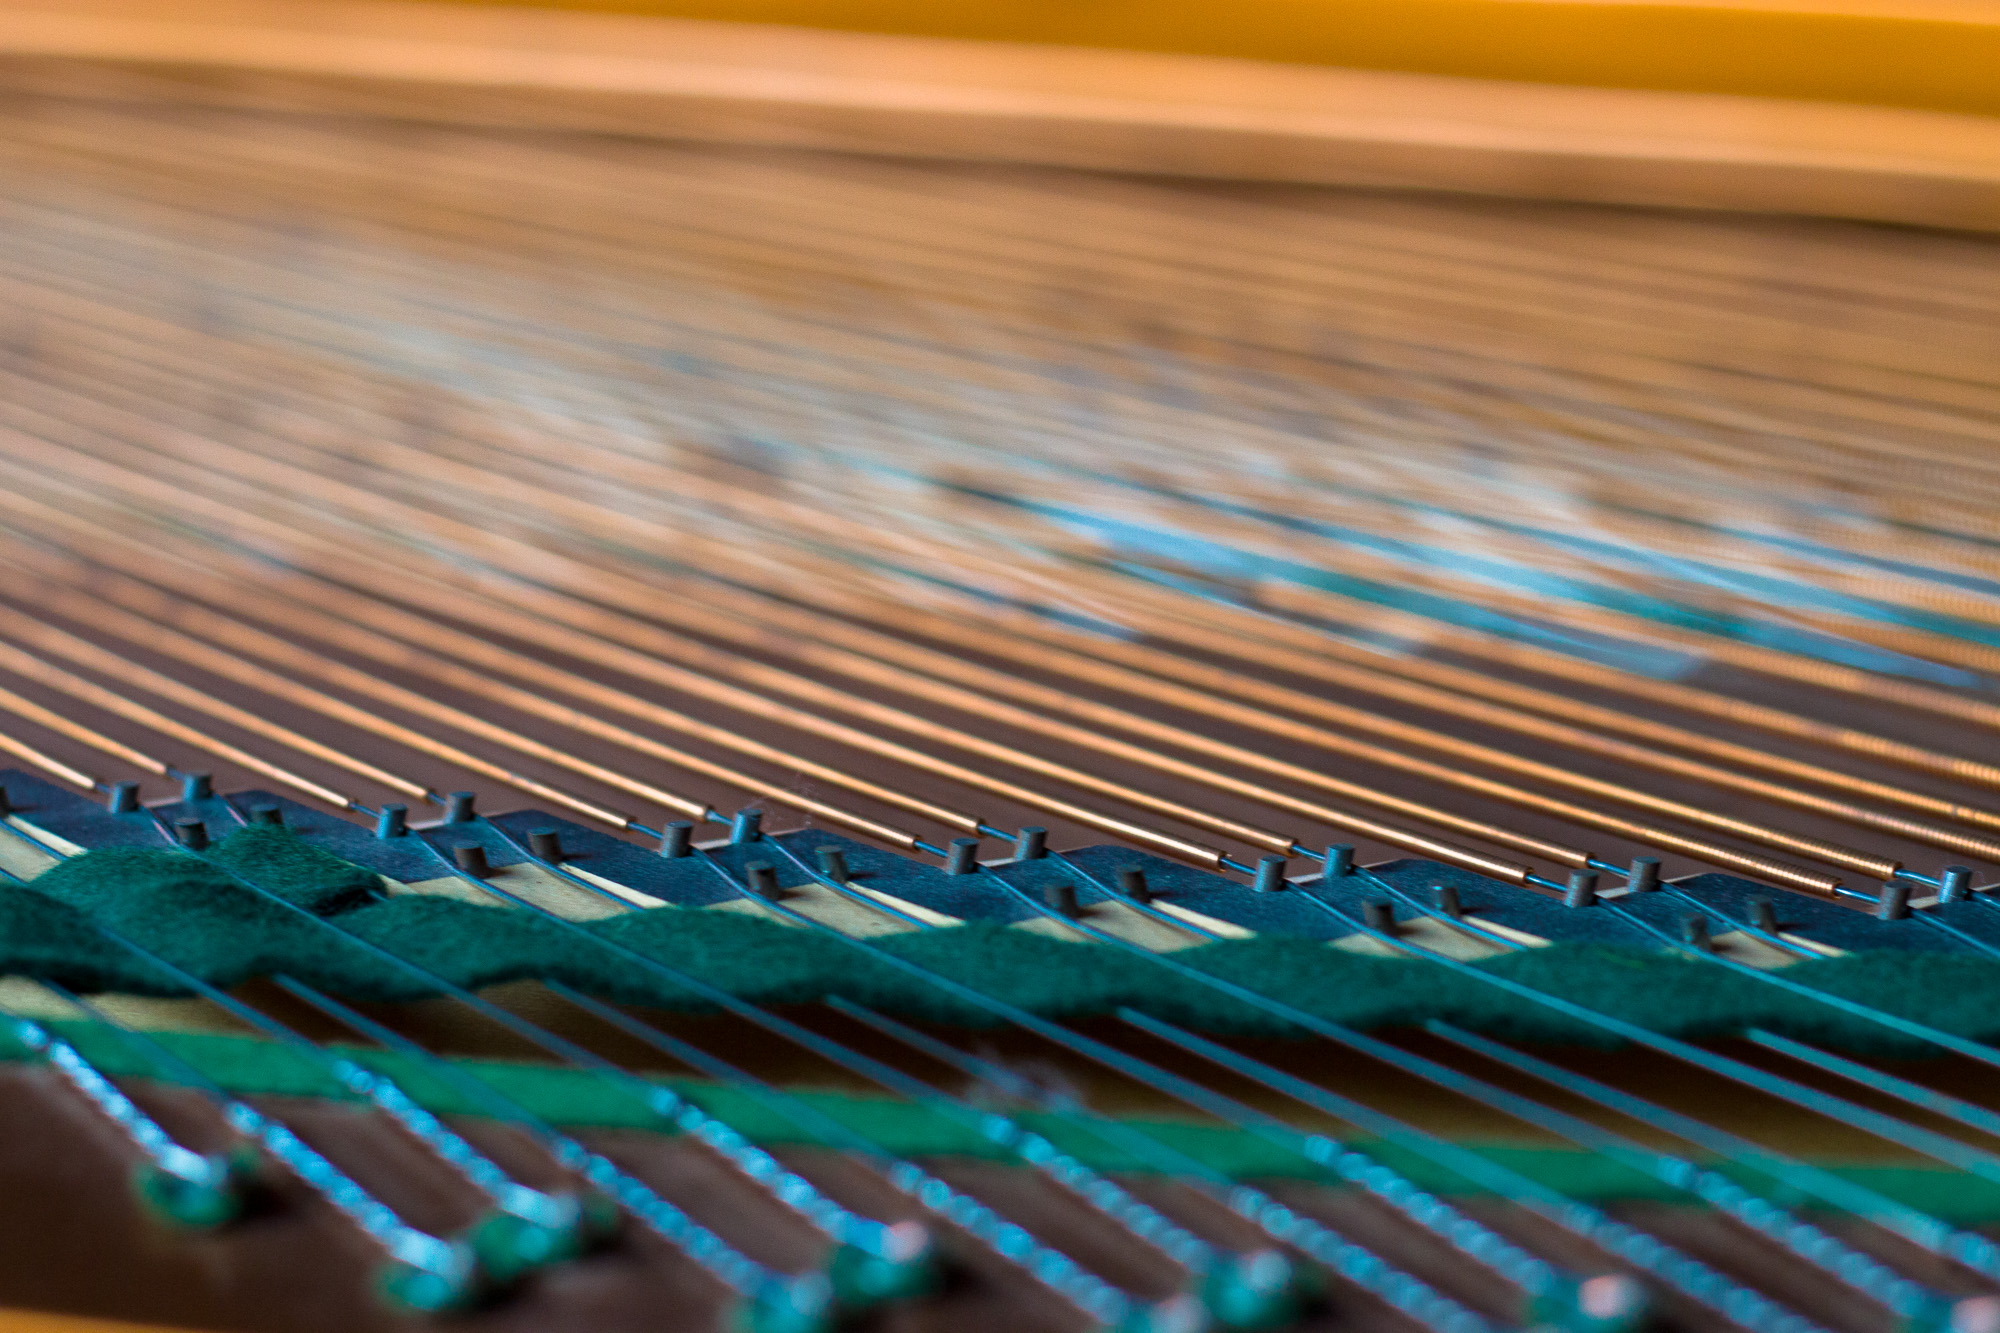 Sheffield piano tuner main banner image piano strings